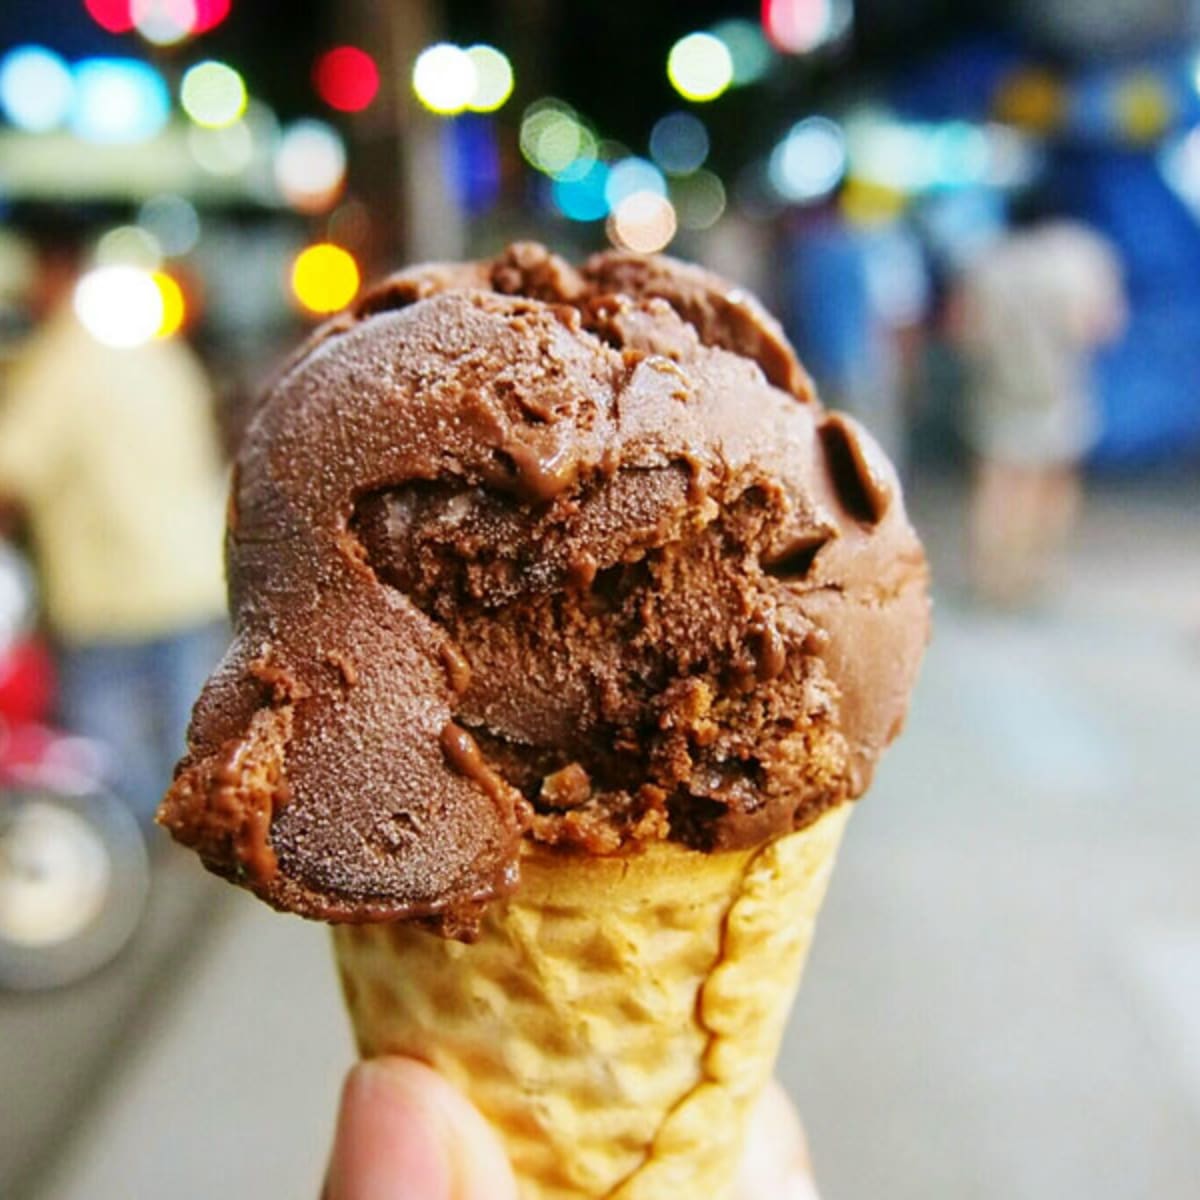 Ice Cream Maker Factory: Ice Scream Dessert Cone